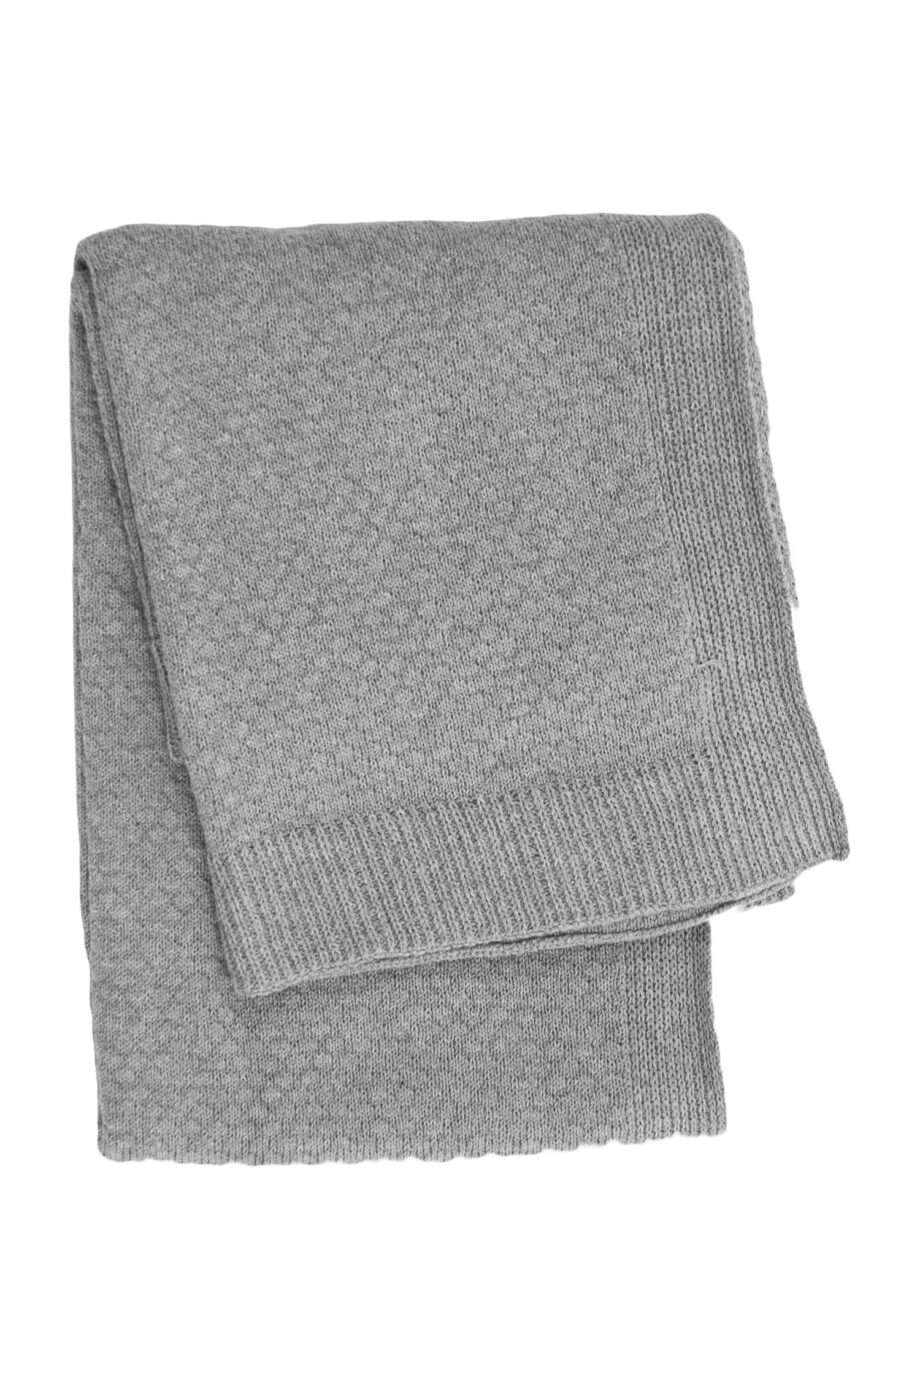 liz light grey knitted cotton little blanket small